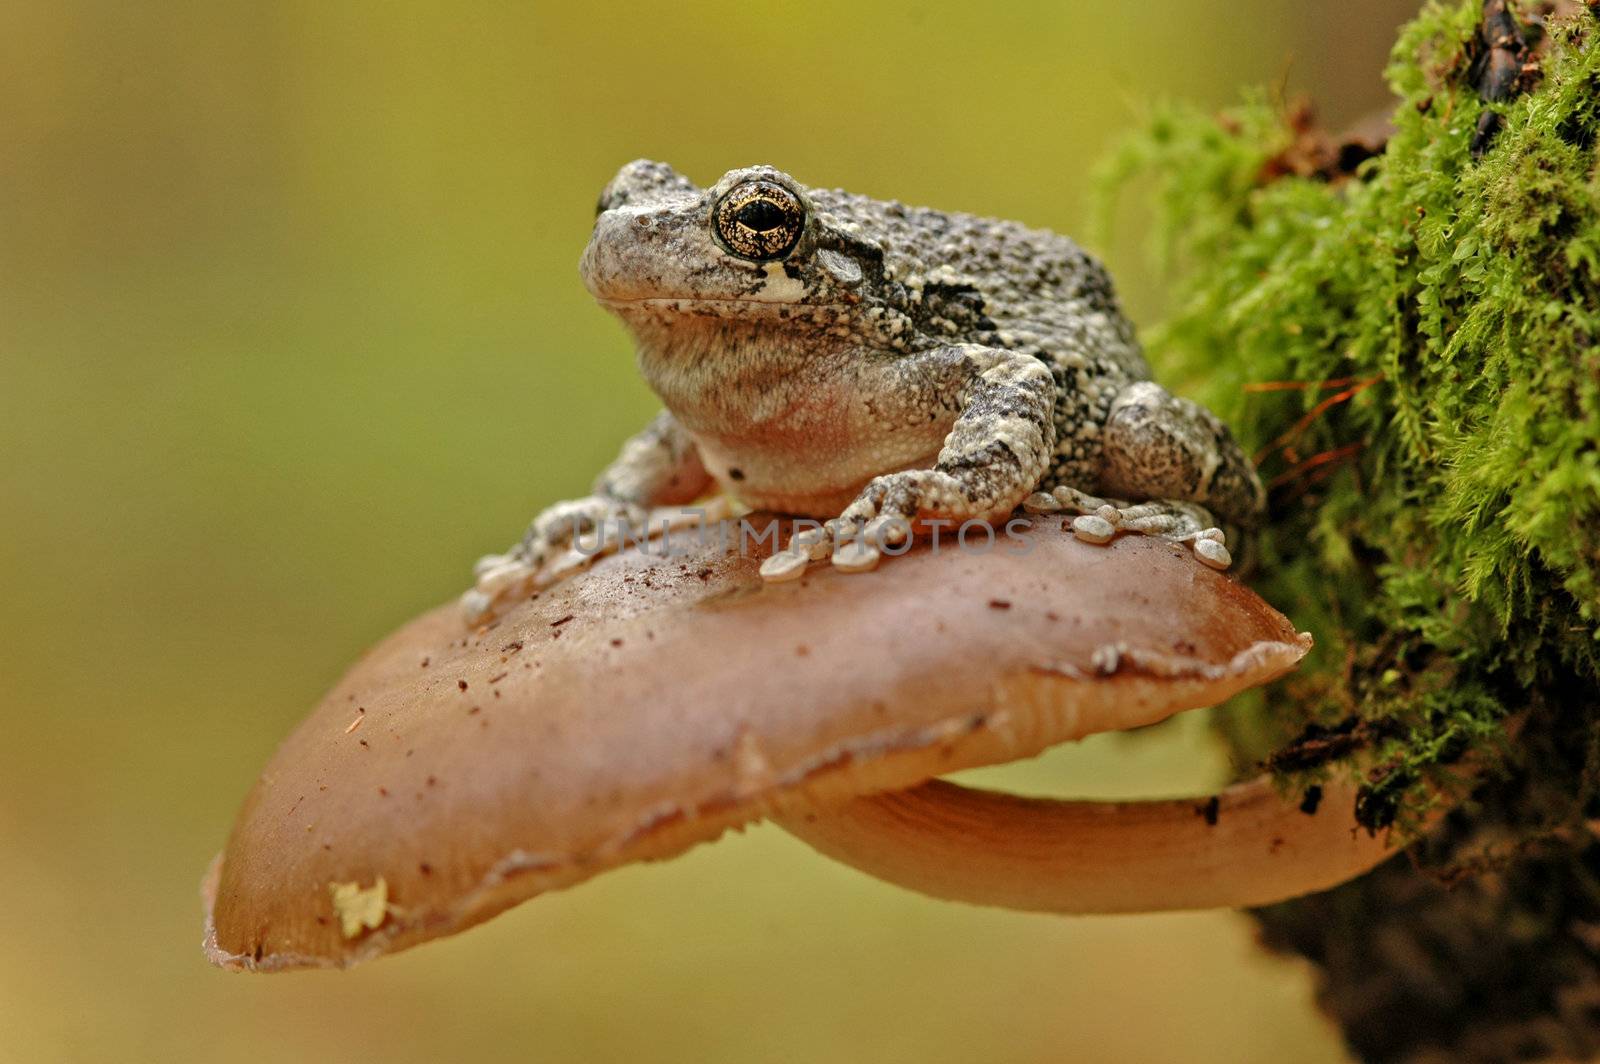 Grey tree frog (Hyla versicolor) by donya_nedomam